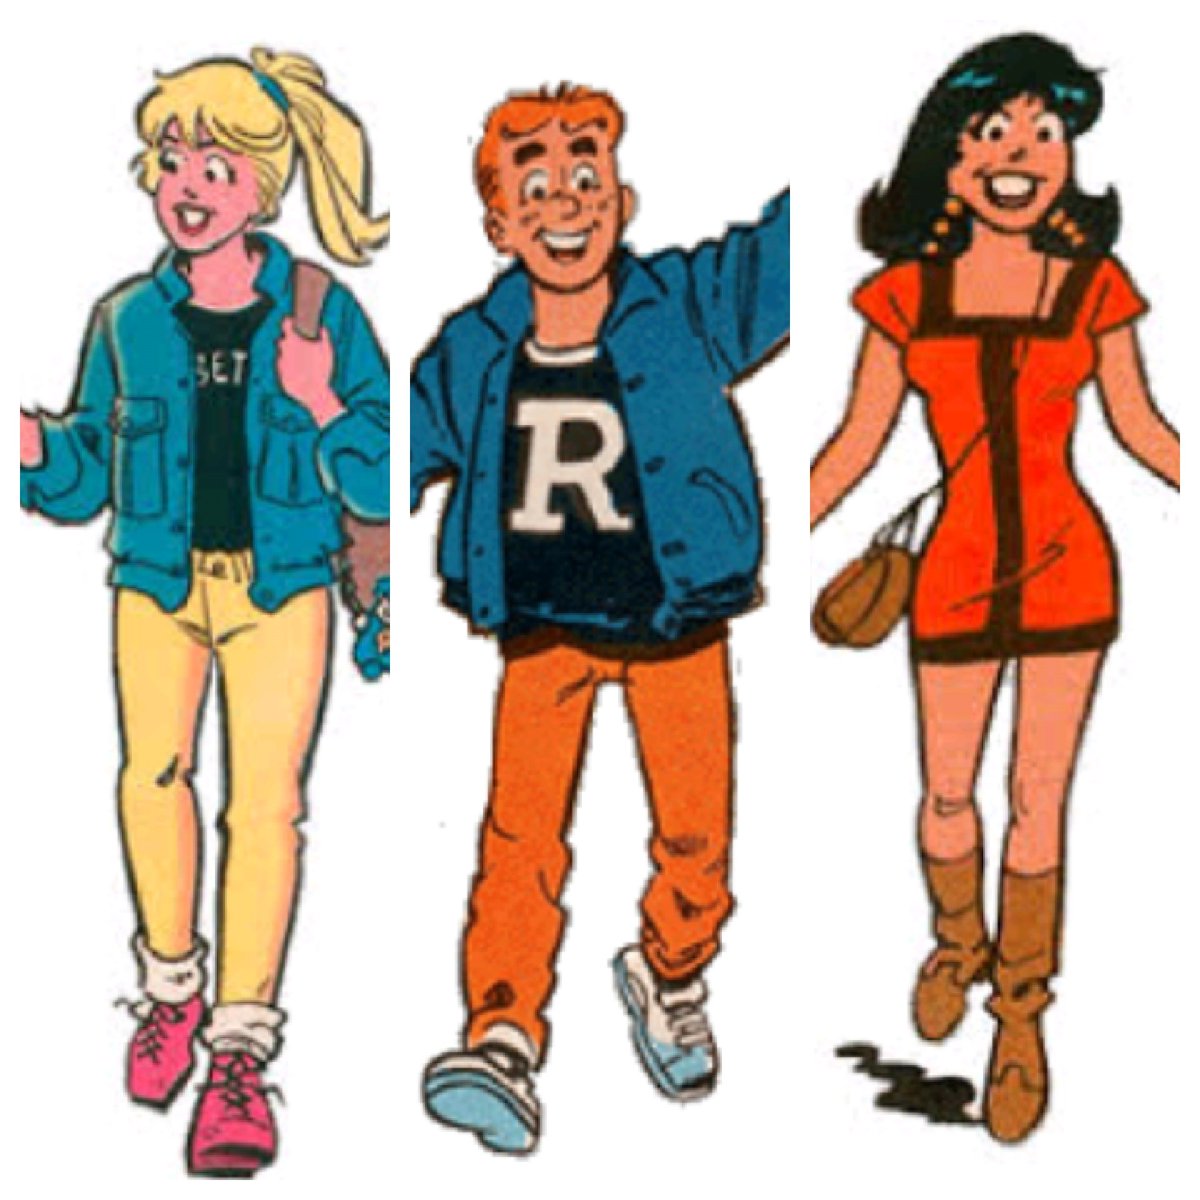 #ASongOrMovieForCartoons 

Archie's Angels